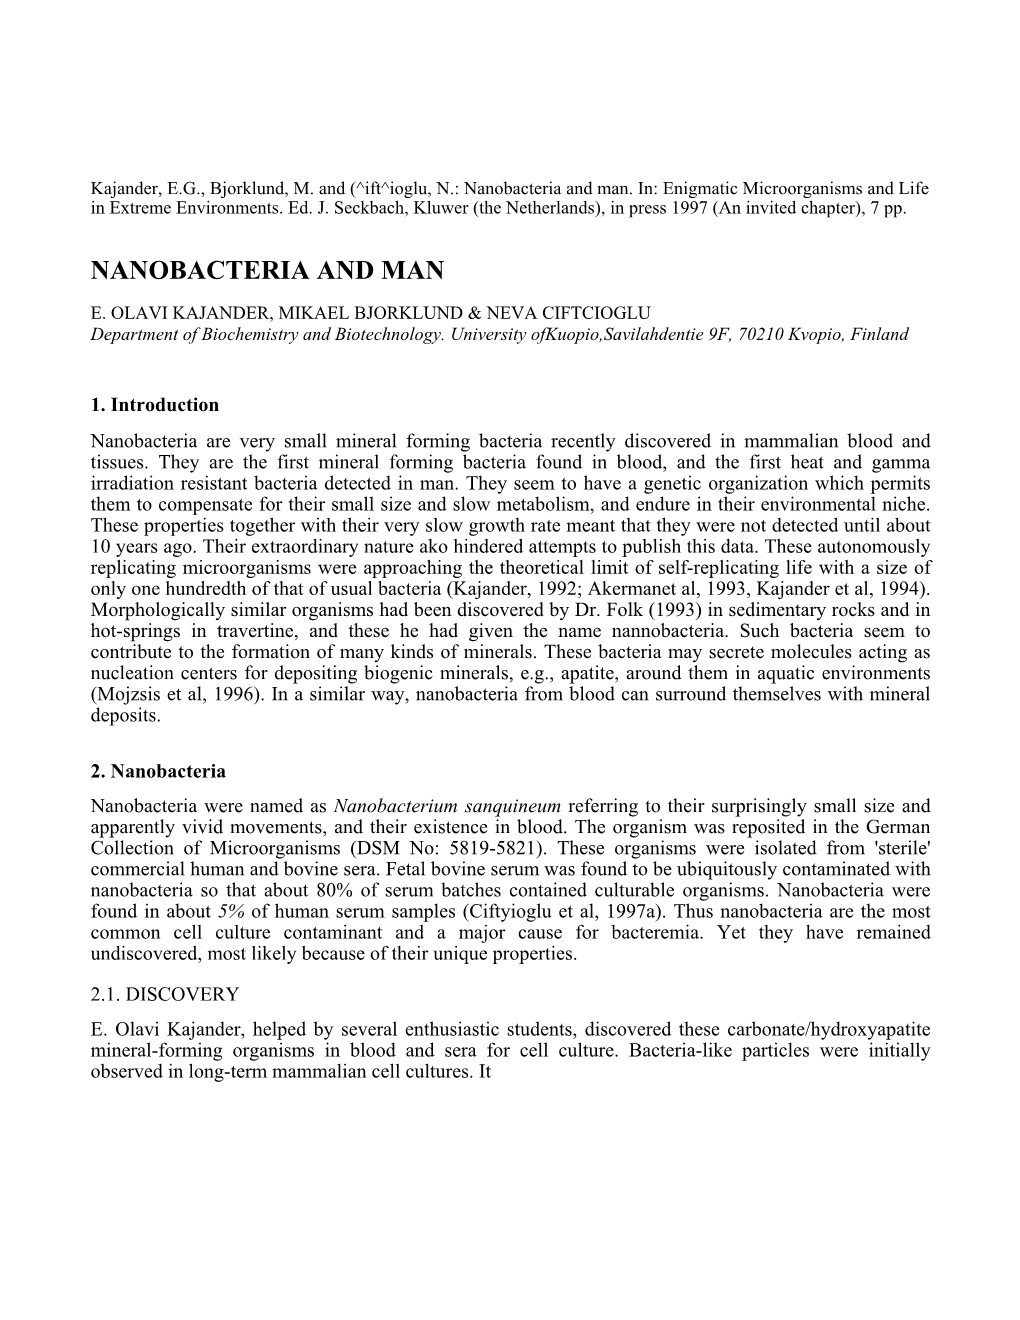 Nanobacteria and Man